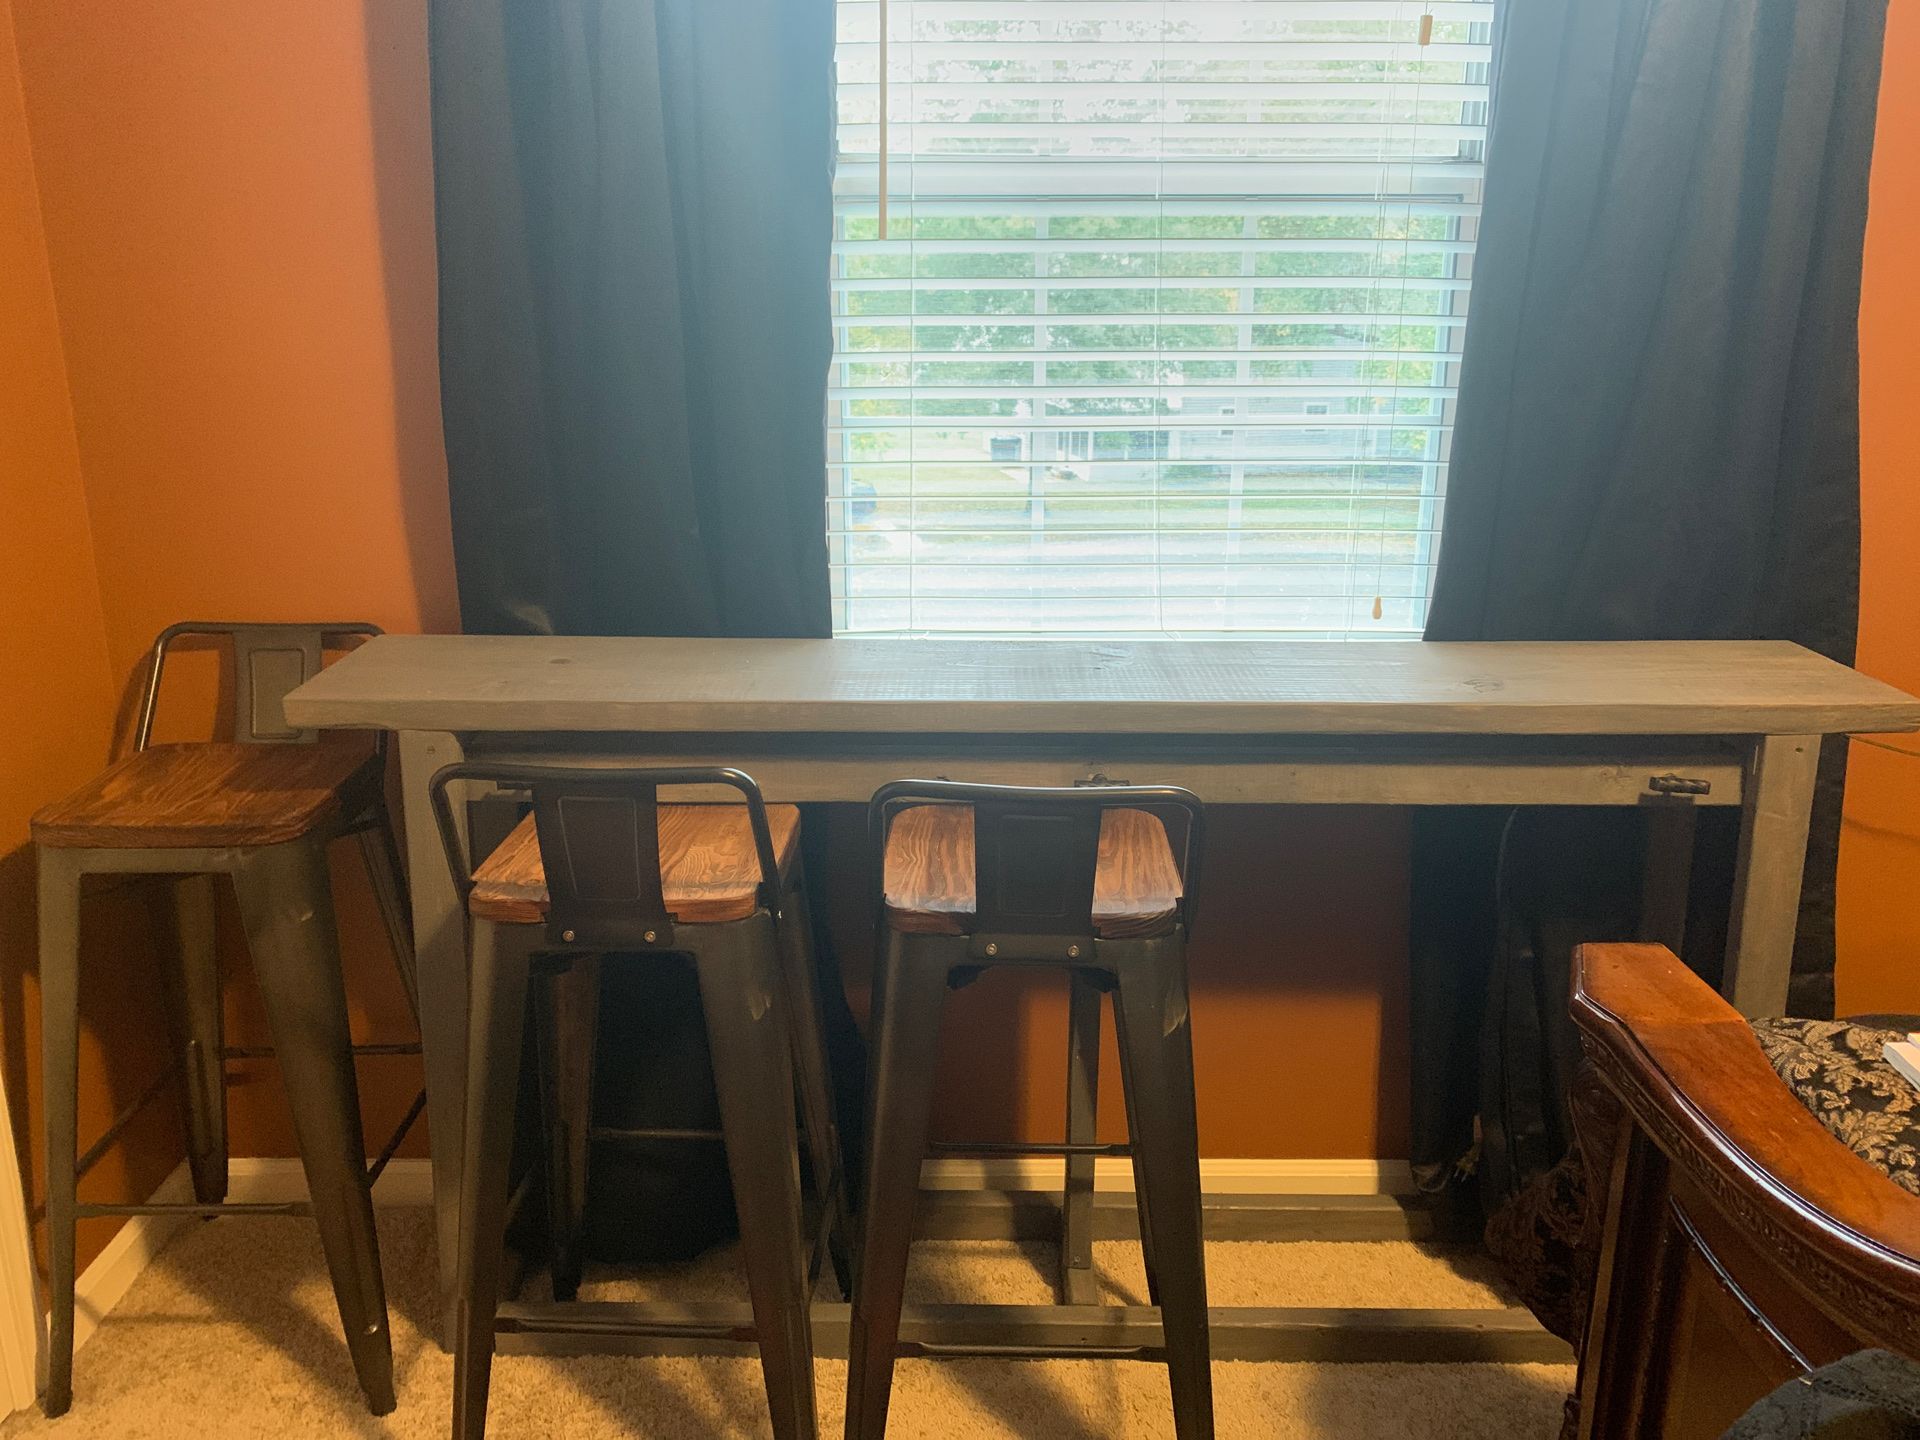 Torjin counter height breakfast table & x4 high bar chairs. 71”x12”x35””